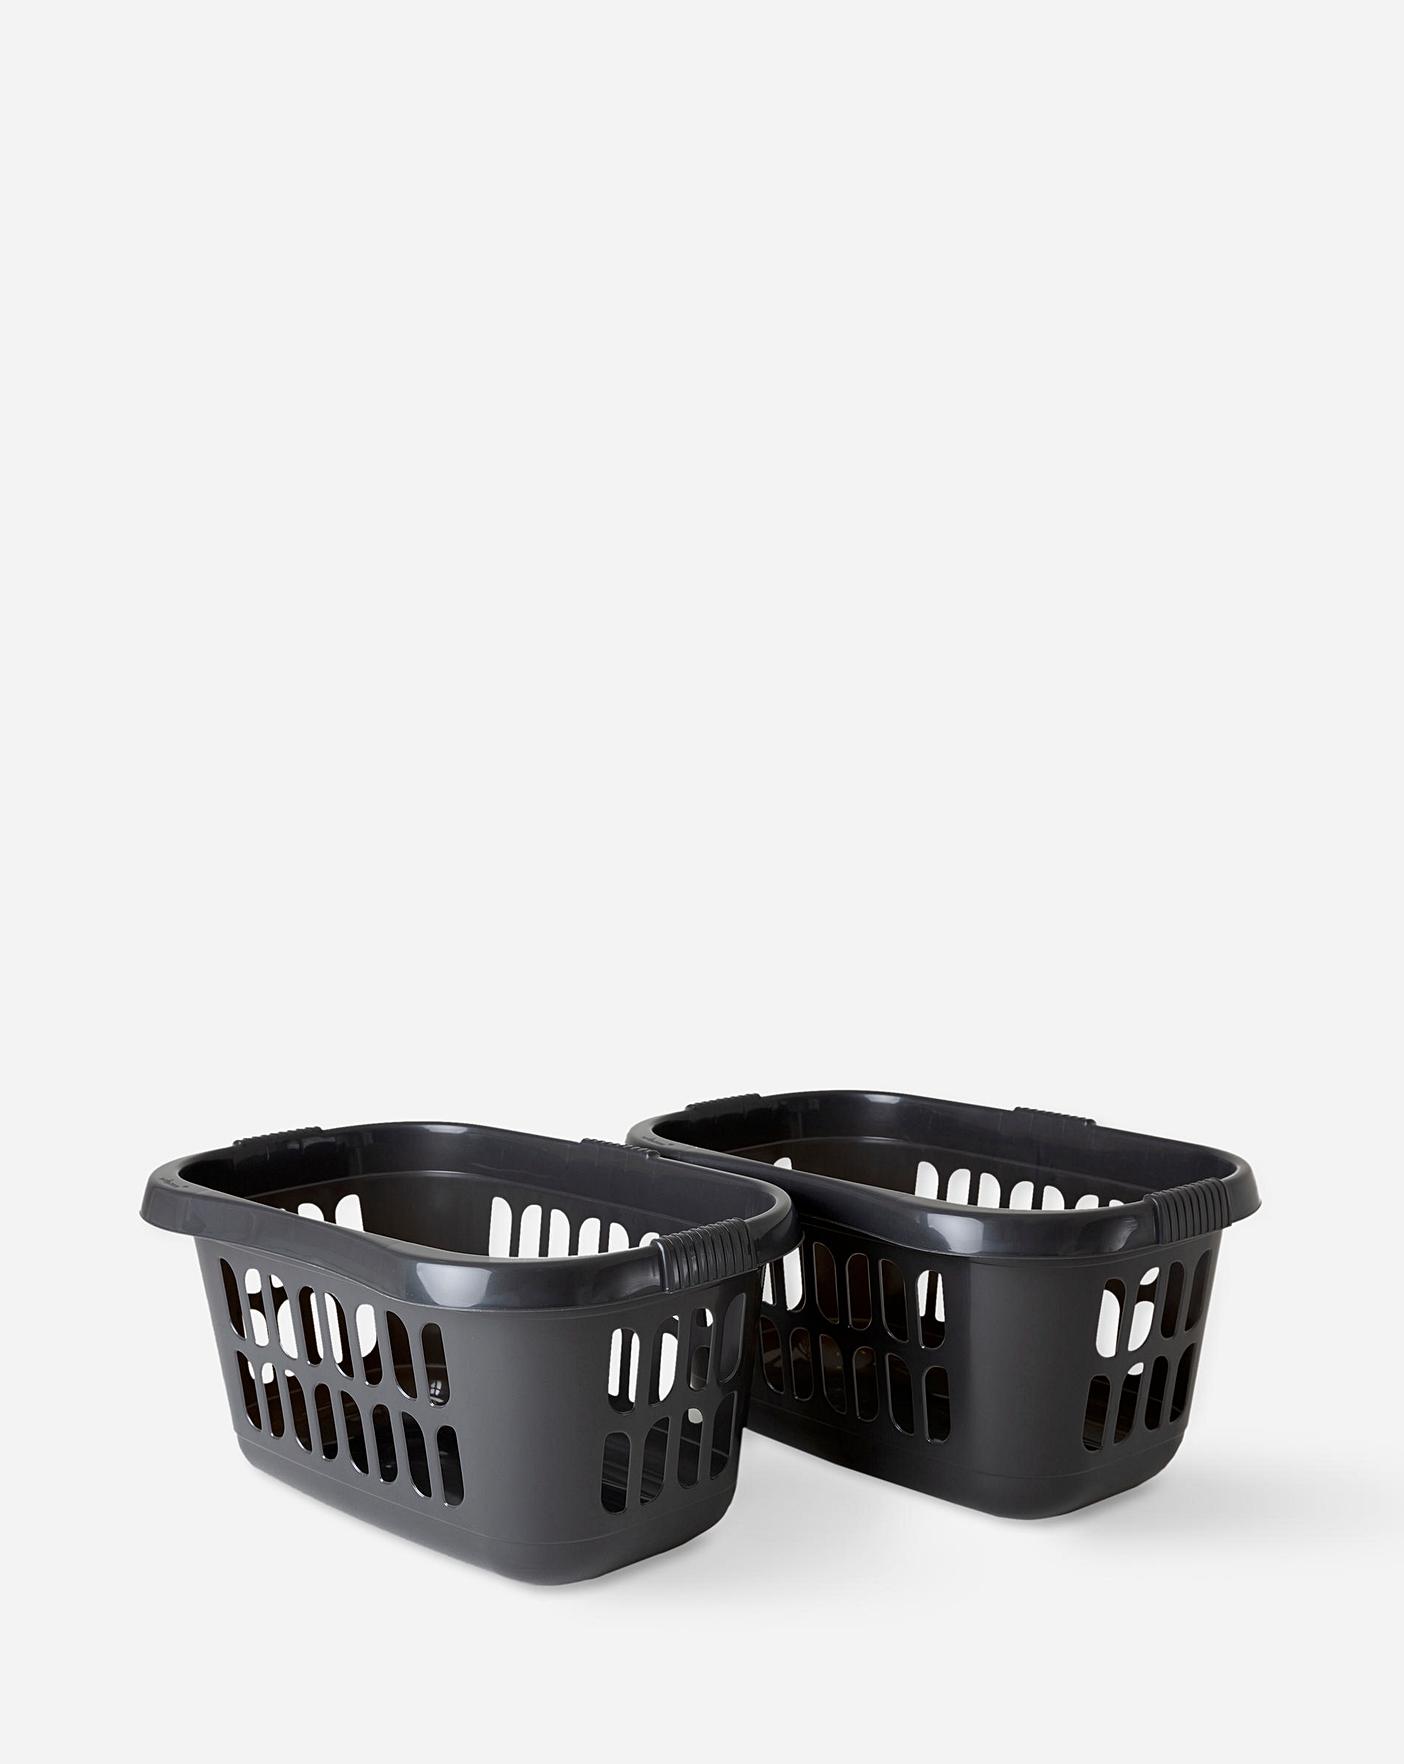 Hipster Laundry Basket